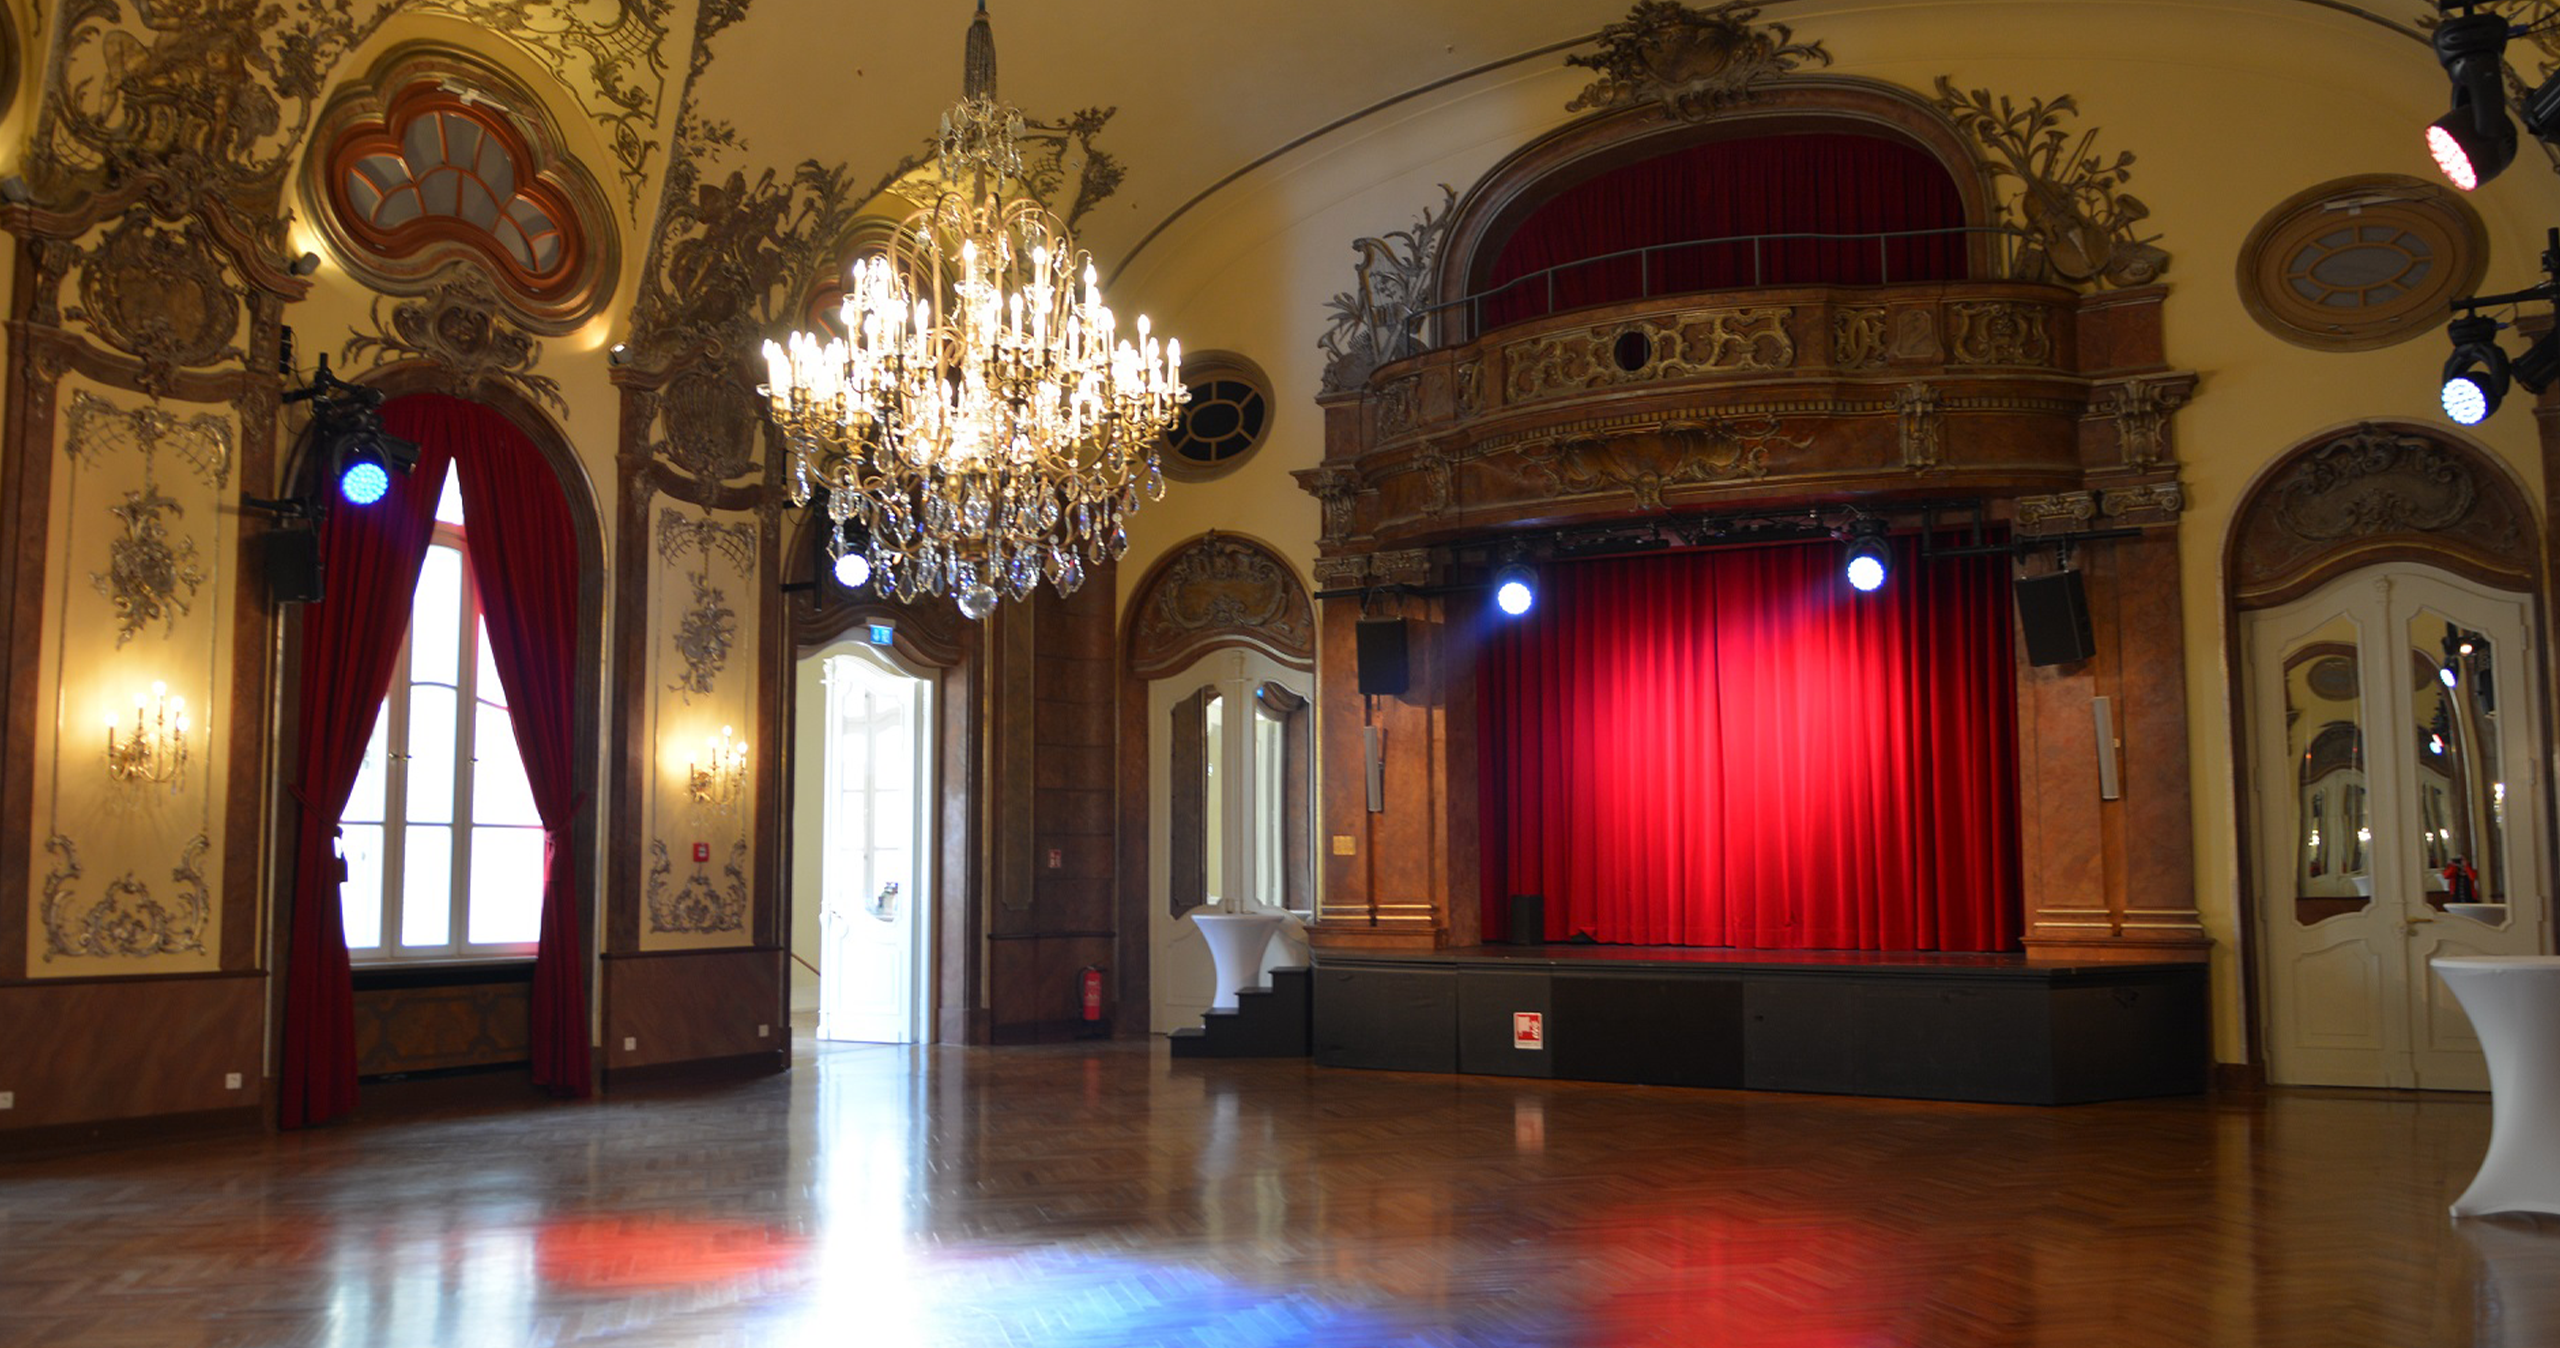 Das barocke Schmuckstück im Herzen Münchens. Der Silbersaal ist denkmalgeschützt.